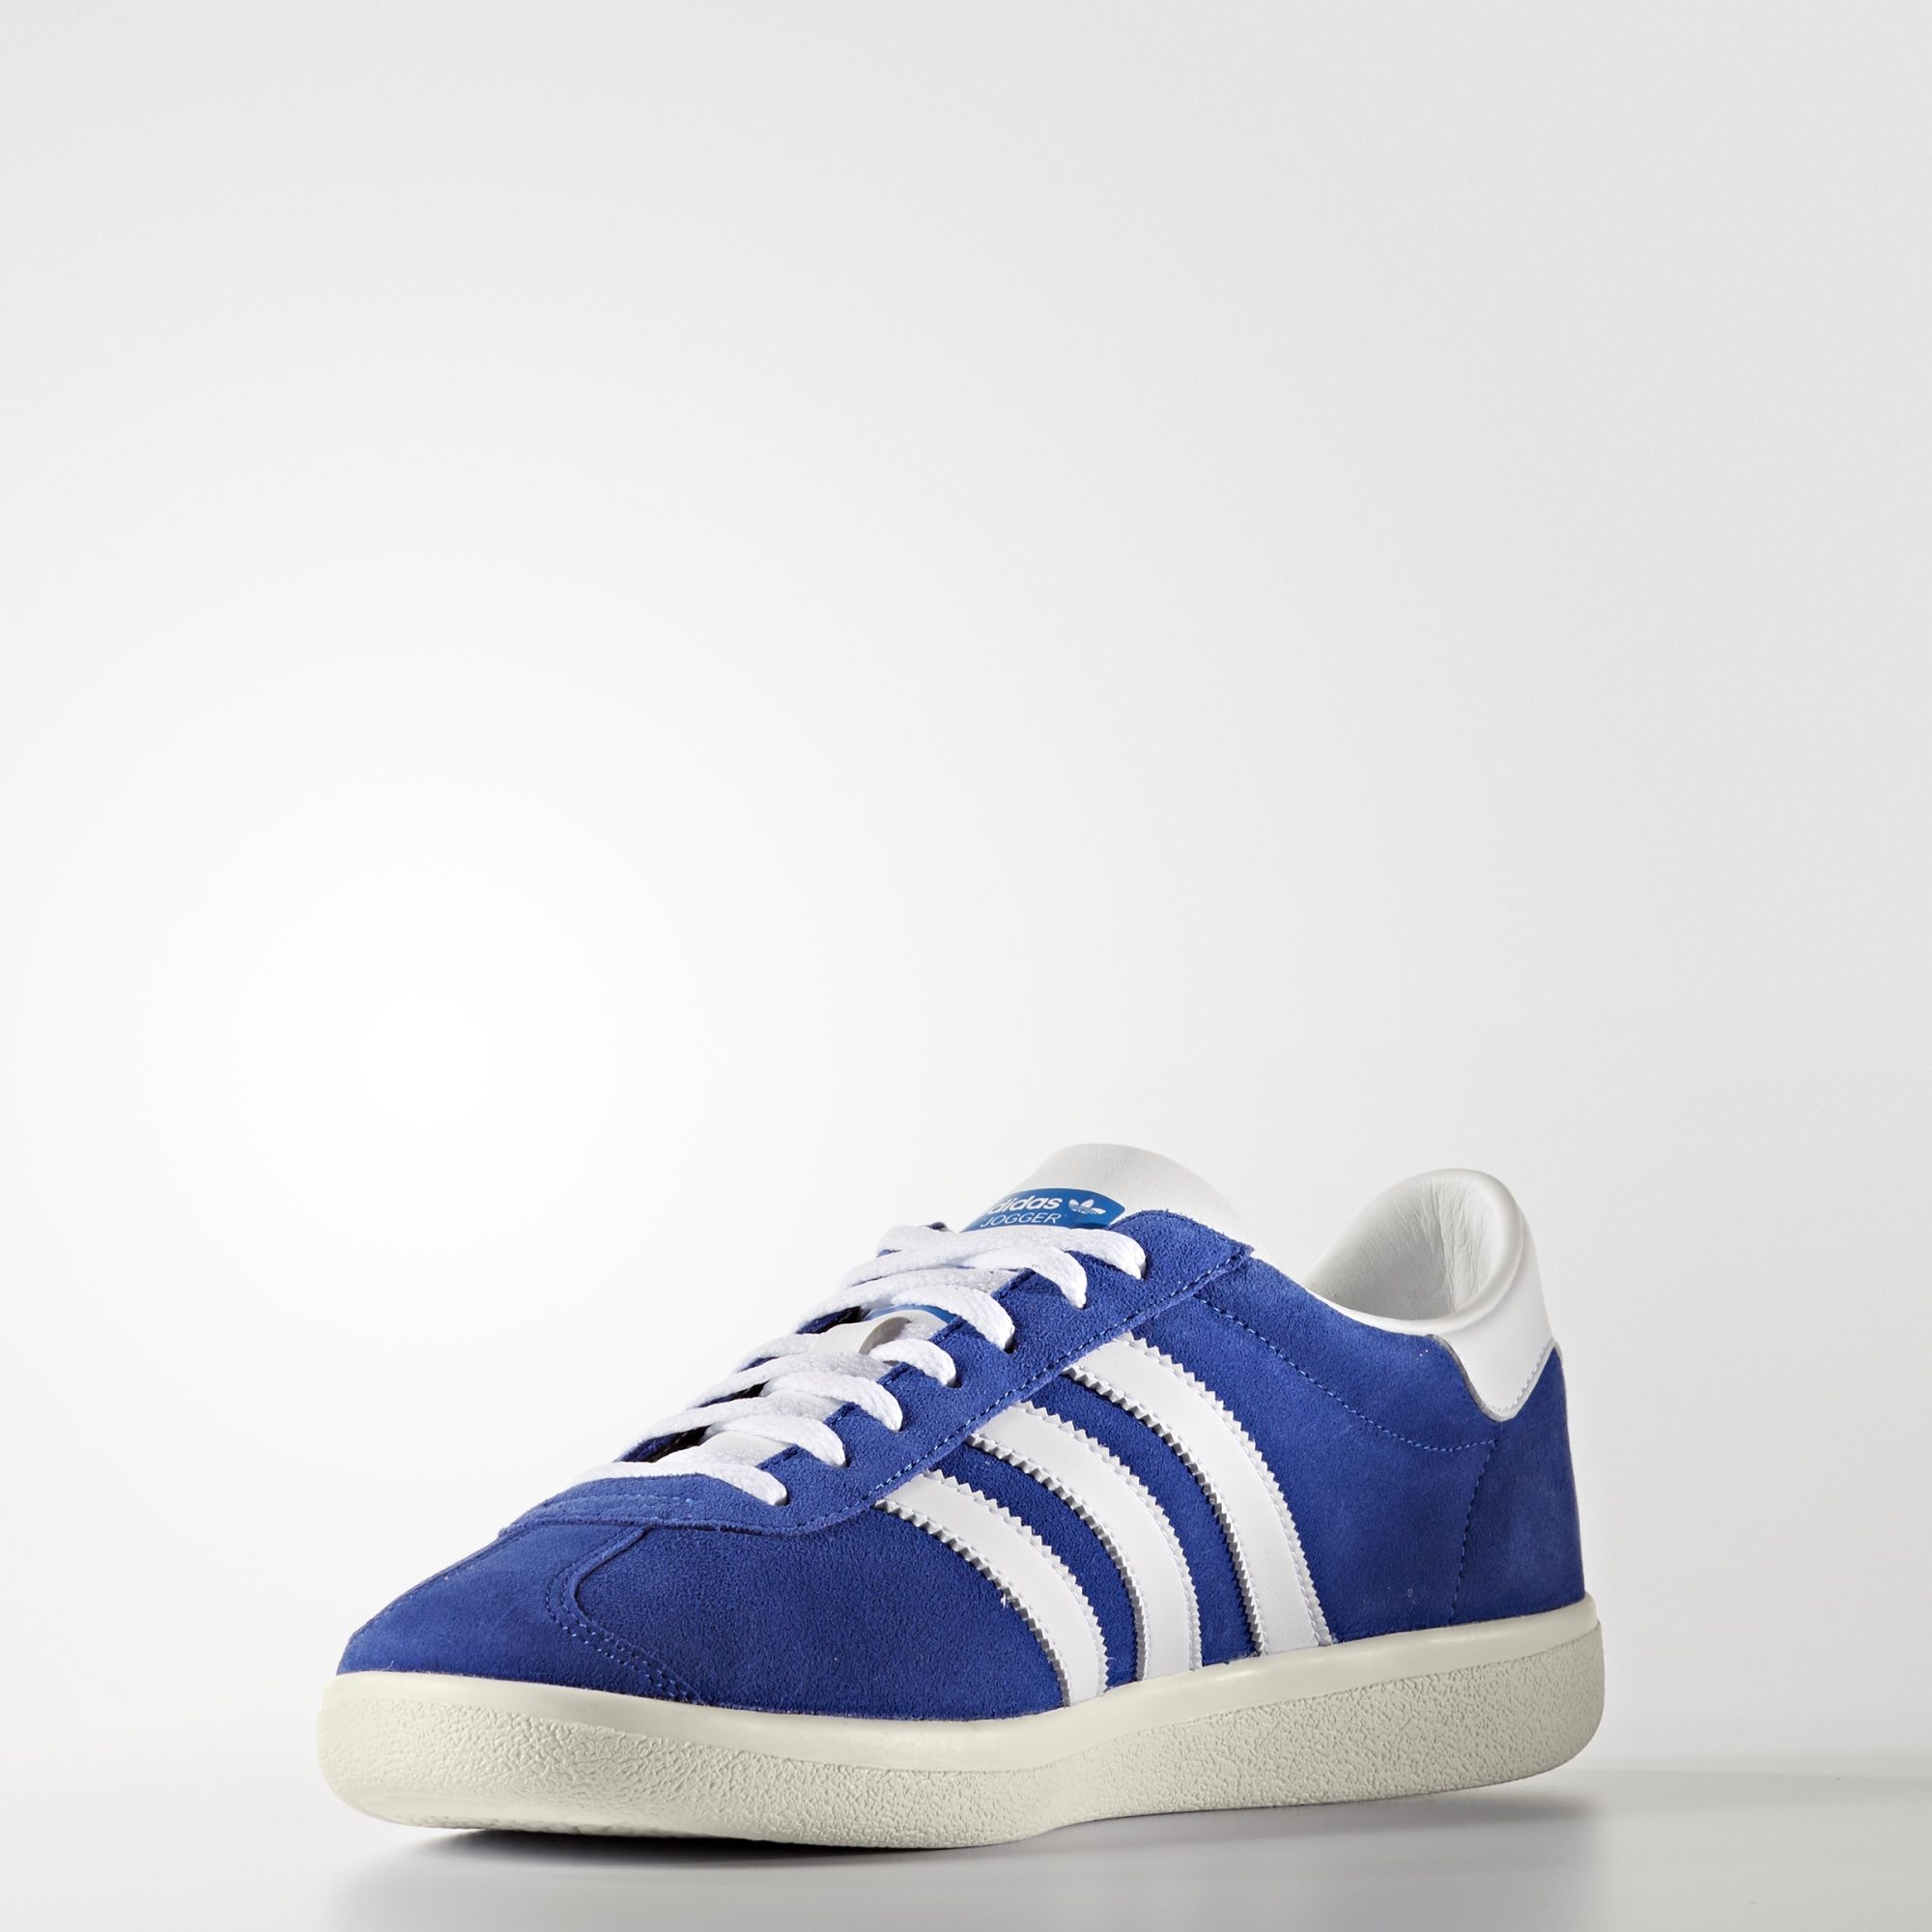 Adidas Jogger SPZL
Blue / Footwear White / Bluebird